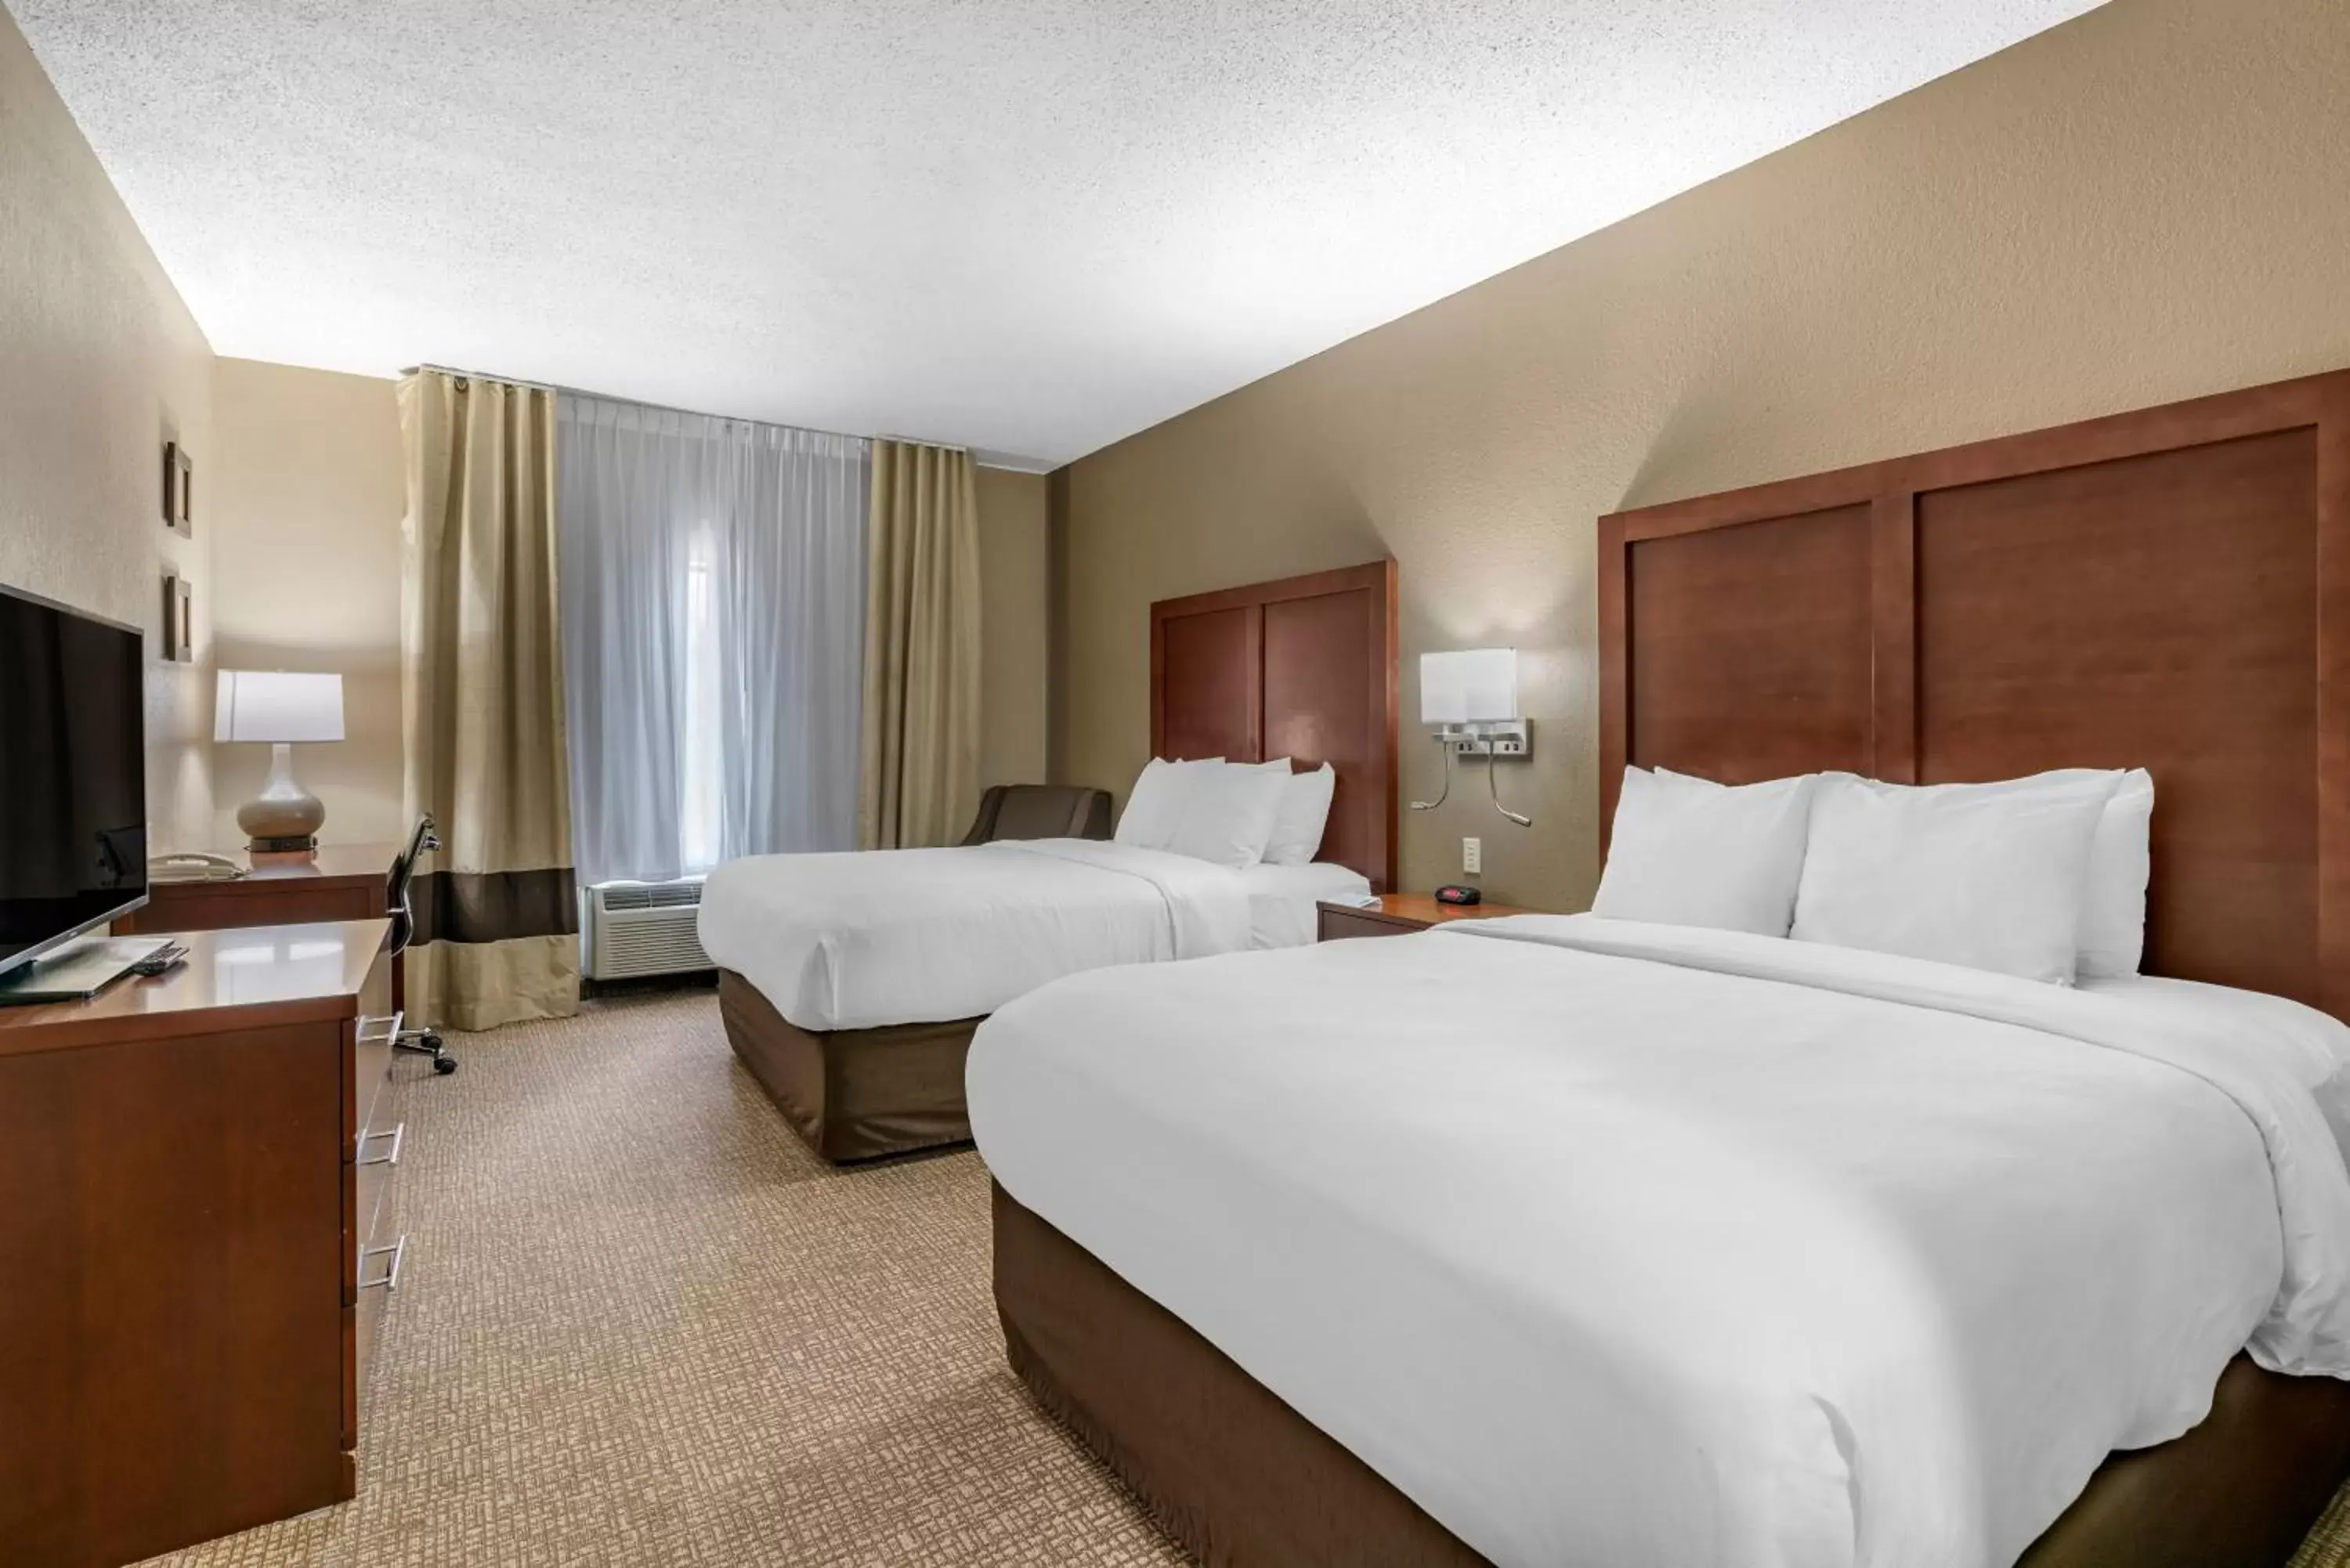 Bedroom, Room Photo in Comfort Inn & Suites St Louis-O'Fallon